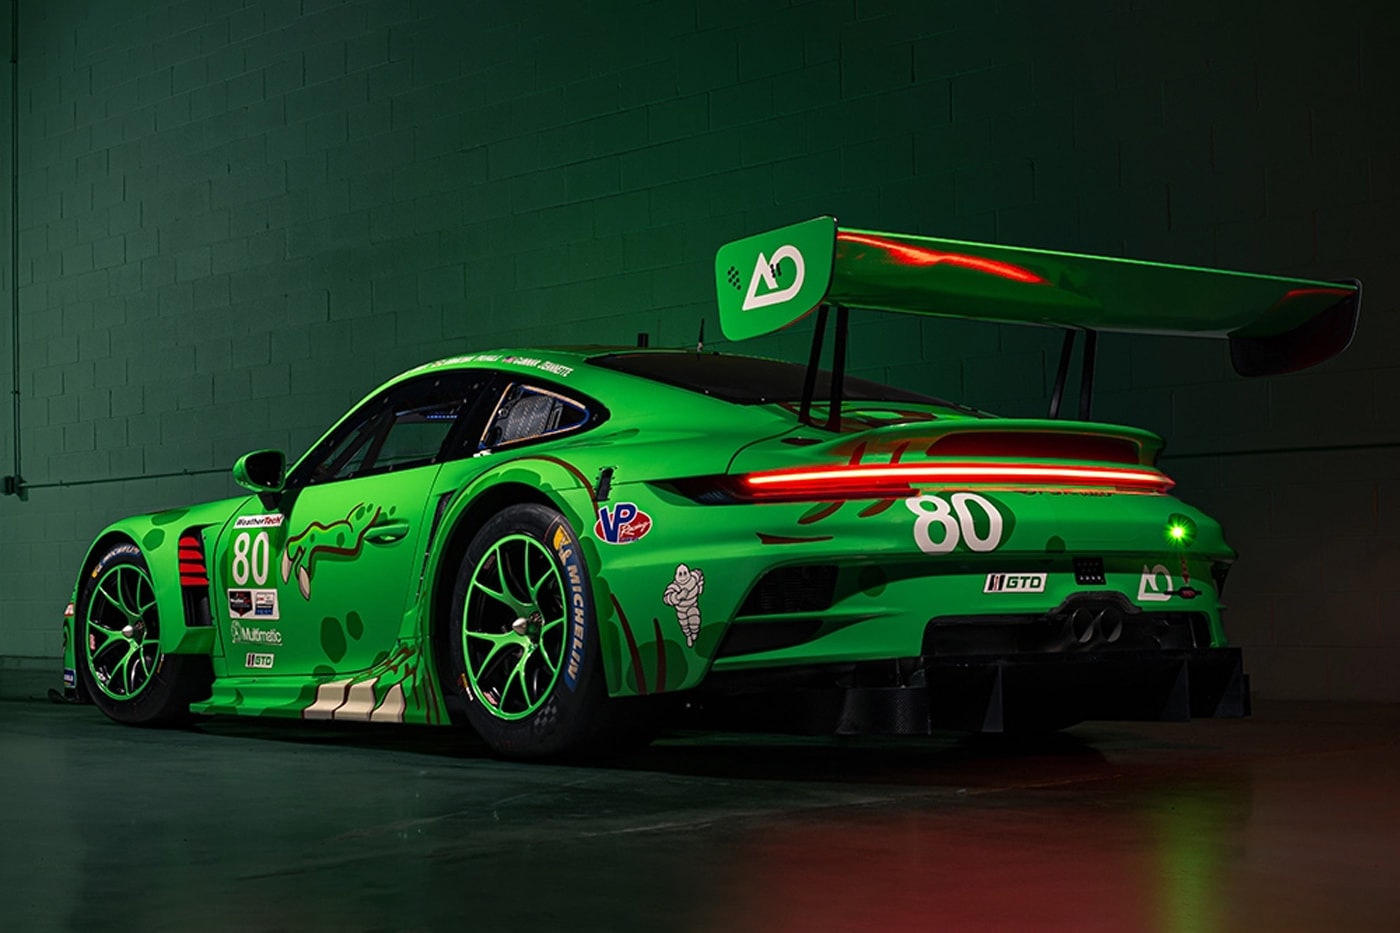 AO Racing Porsche 911 T Rex Livery Full Season GT3 Rawr pj hyett fia world endurance championship images info